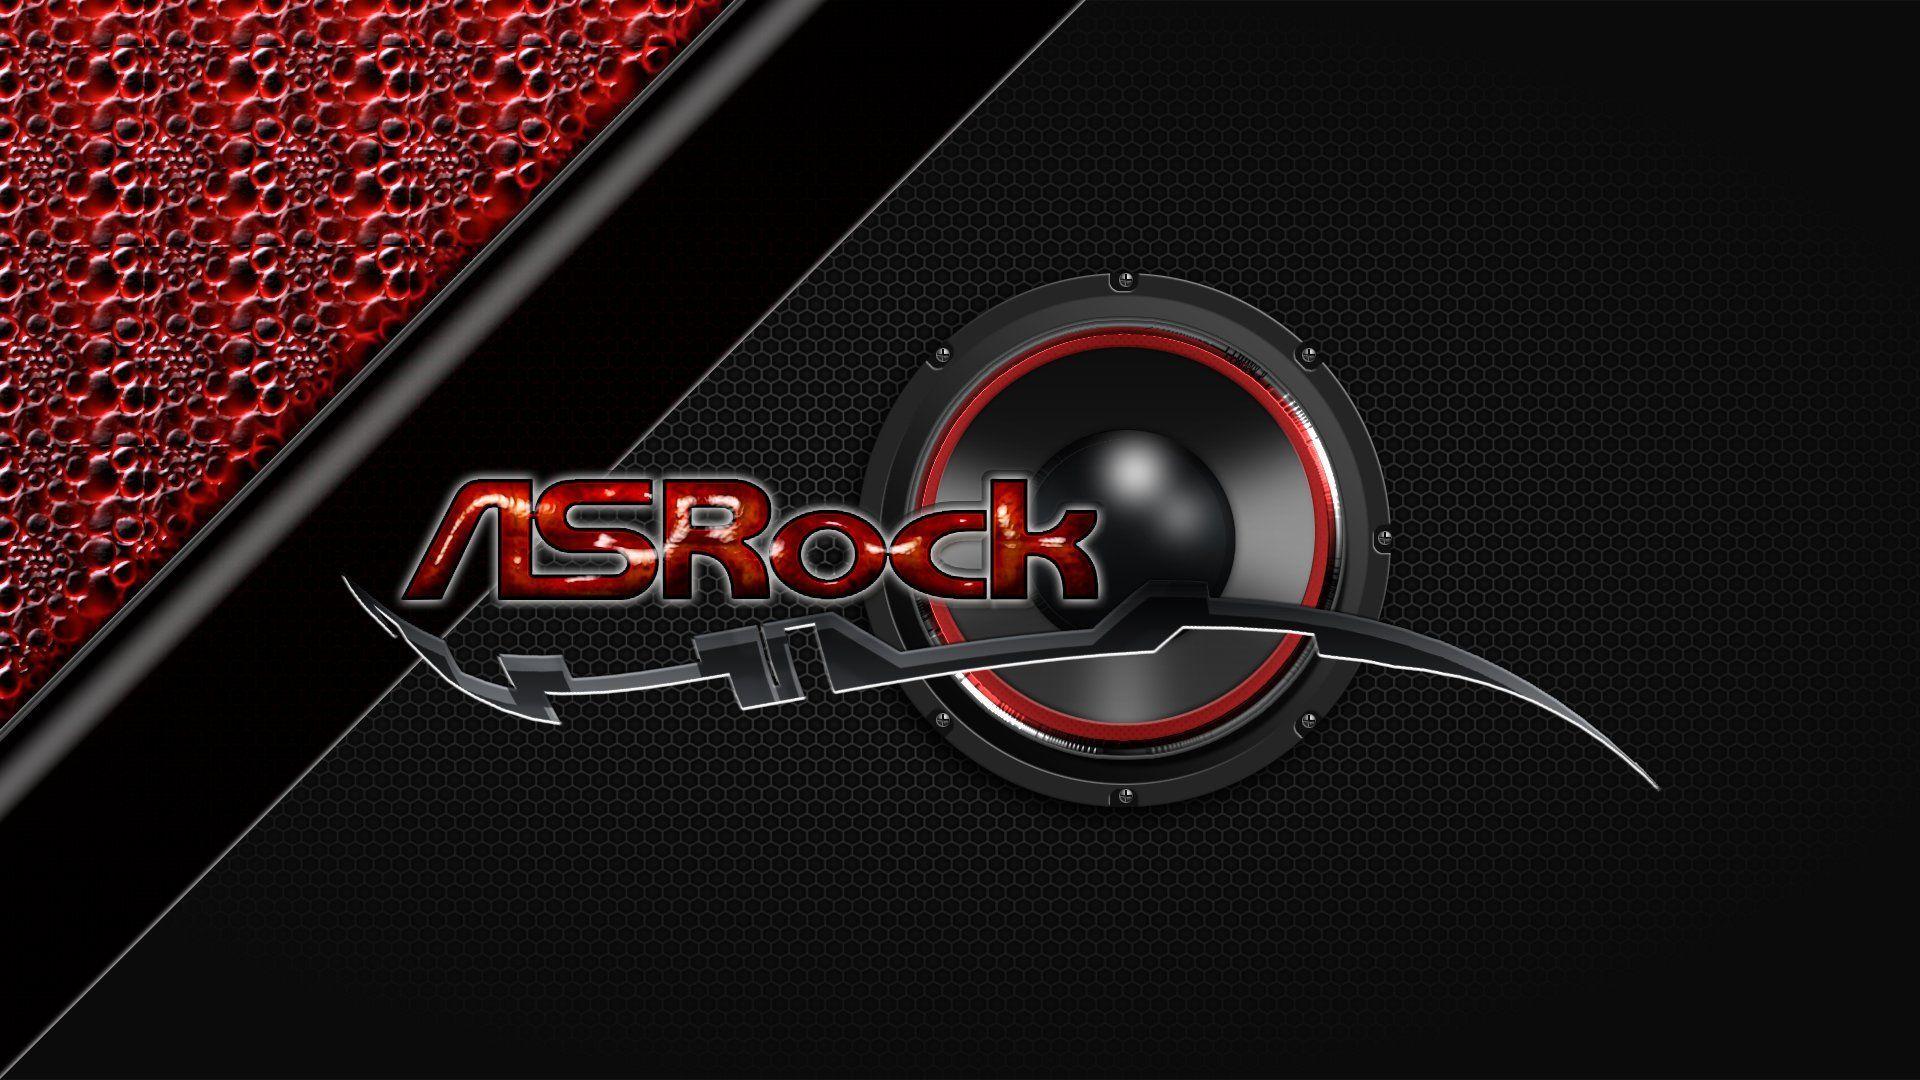 ASRock Logo - ASRock Wallpaper Free ASRock Background